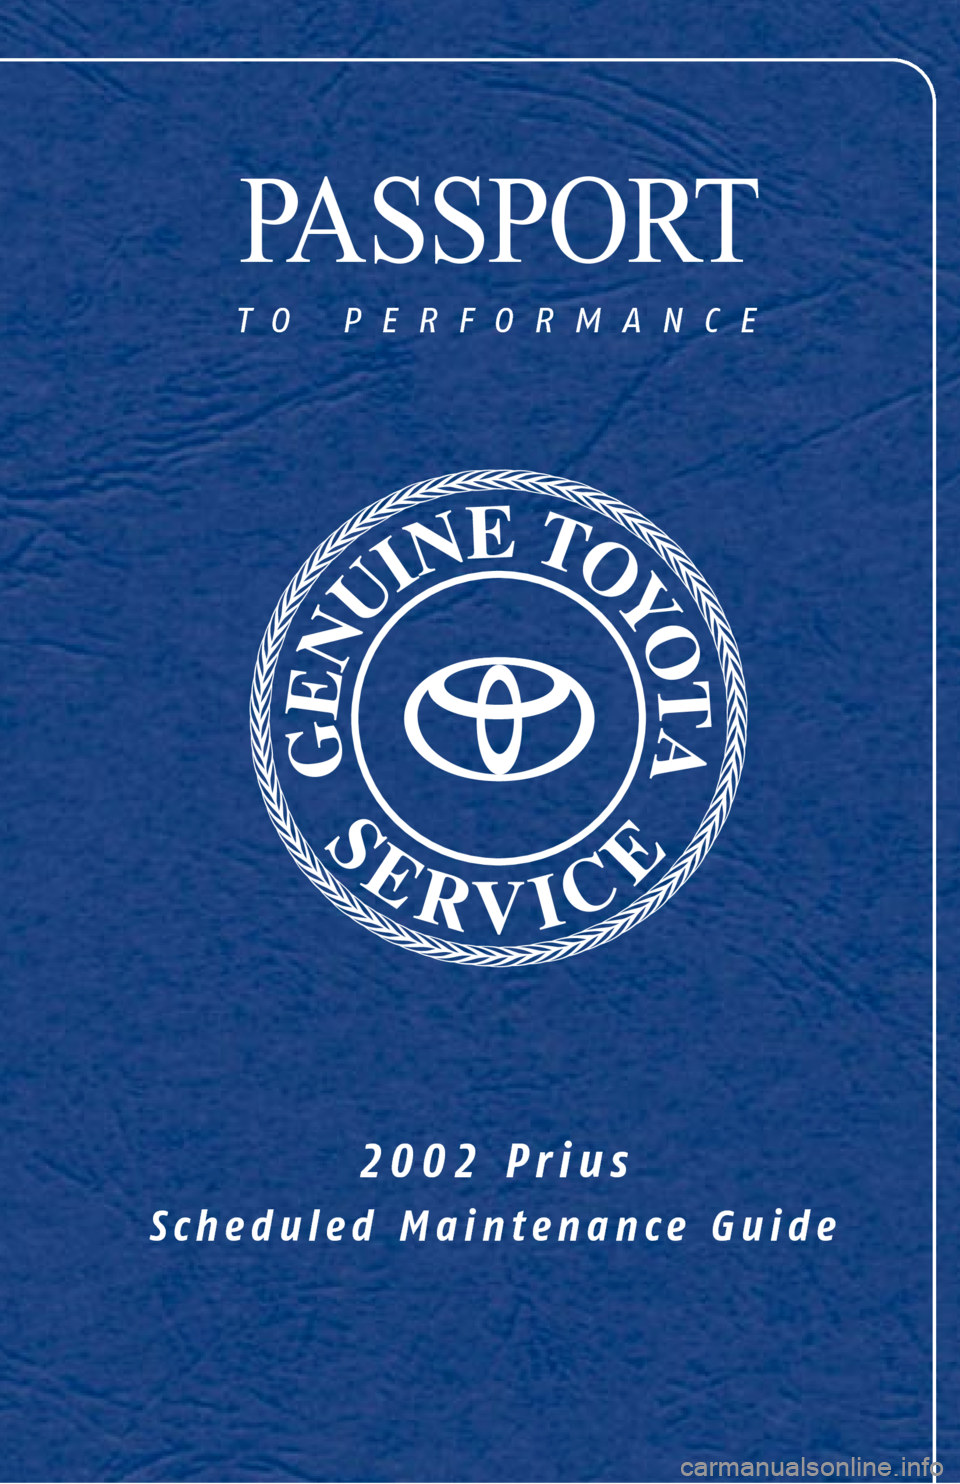 TOYOTA PRIUS 2002 1.G Scheduled Maintenance Guide PASSPORT
to performance
2002 Prius
Scheduled Maintenance Guide 